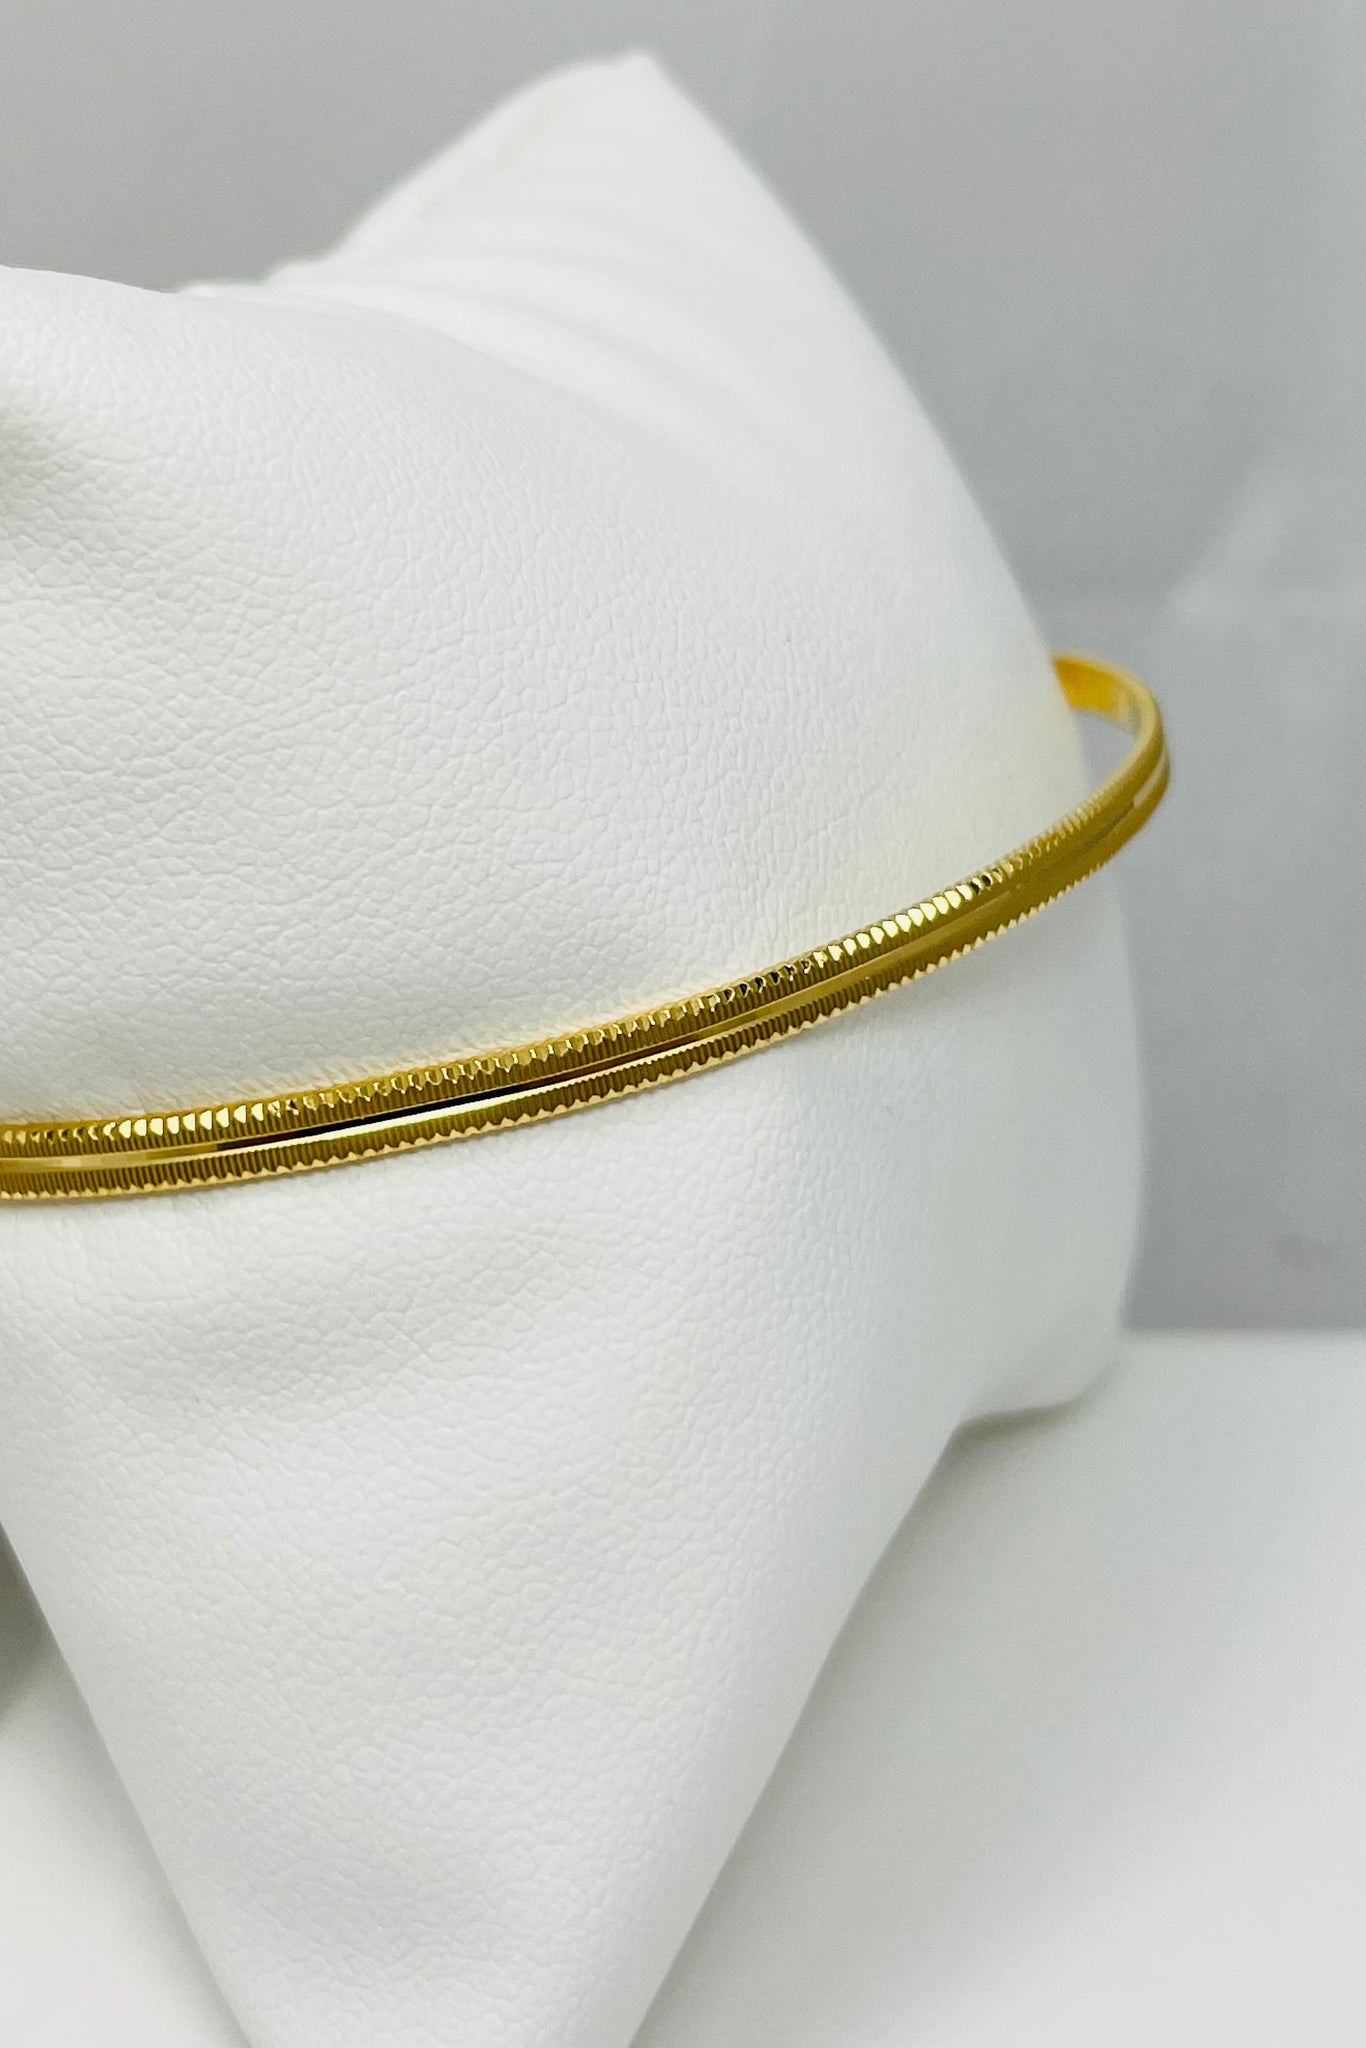 22k Solid Yellow Gold Slip On Bangle Bracelet